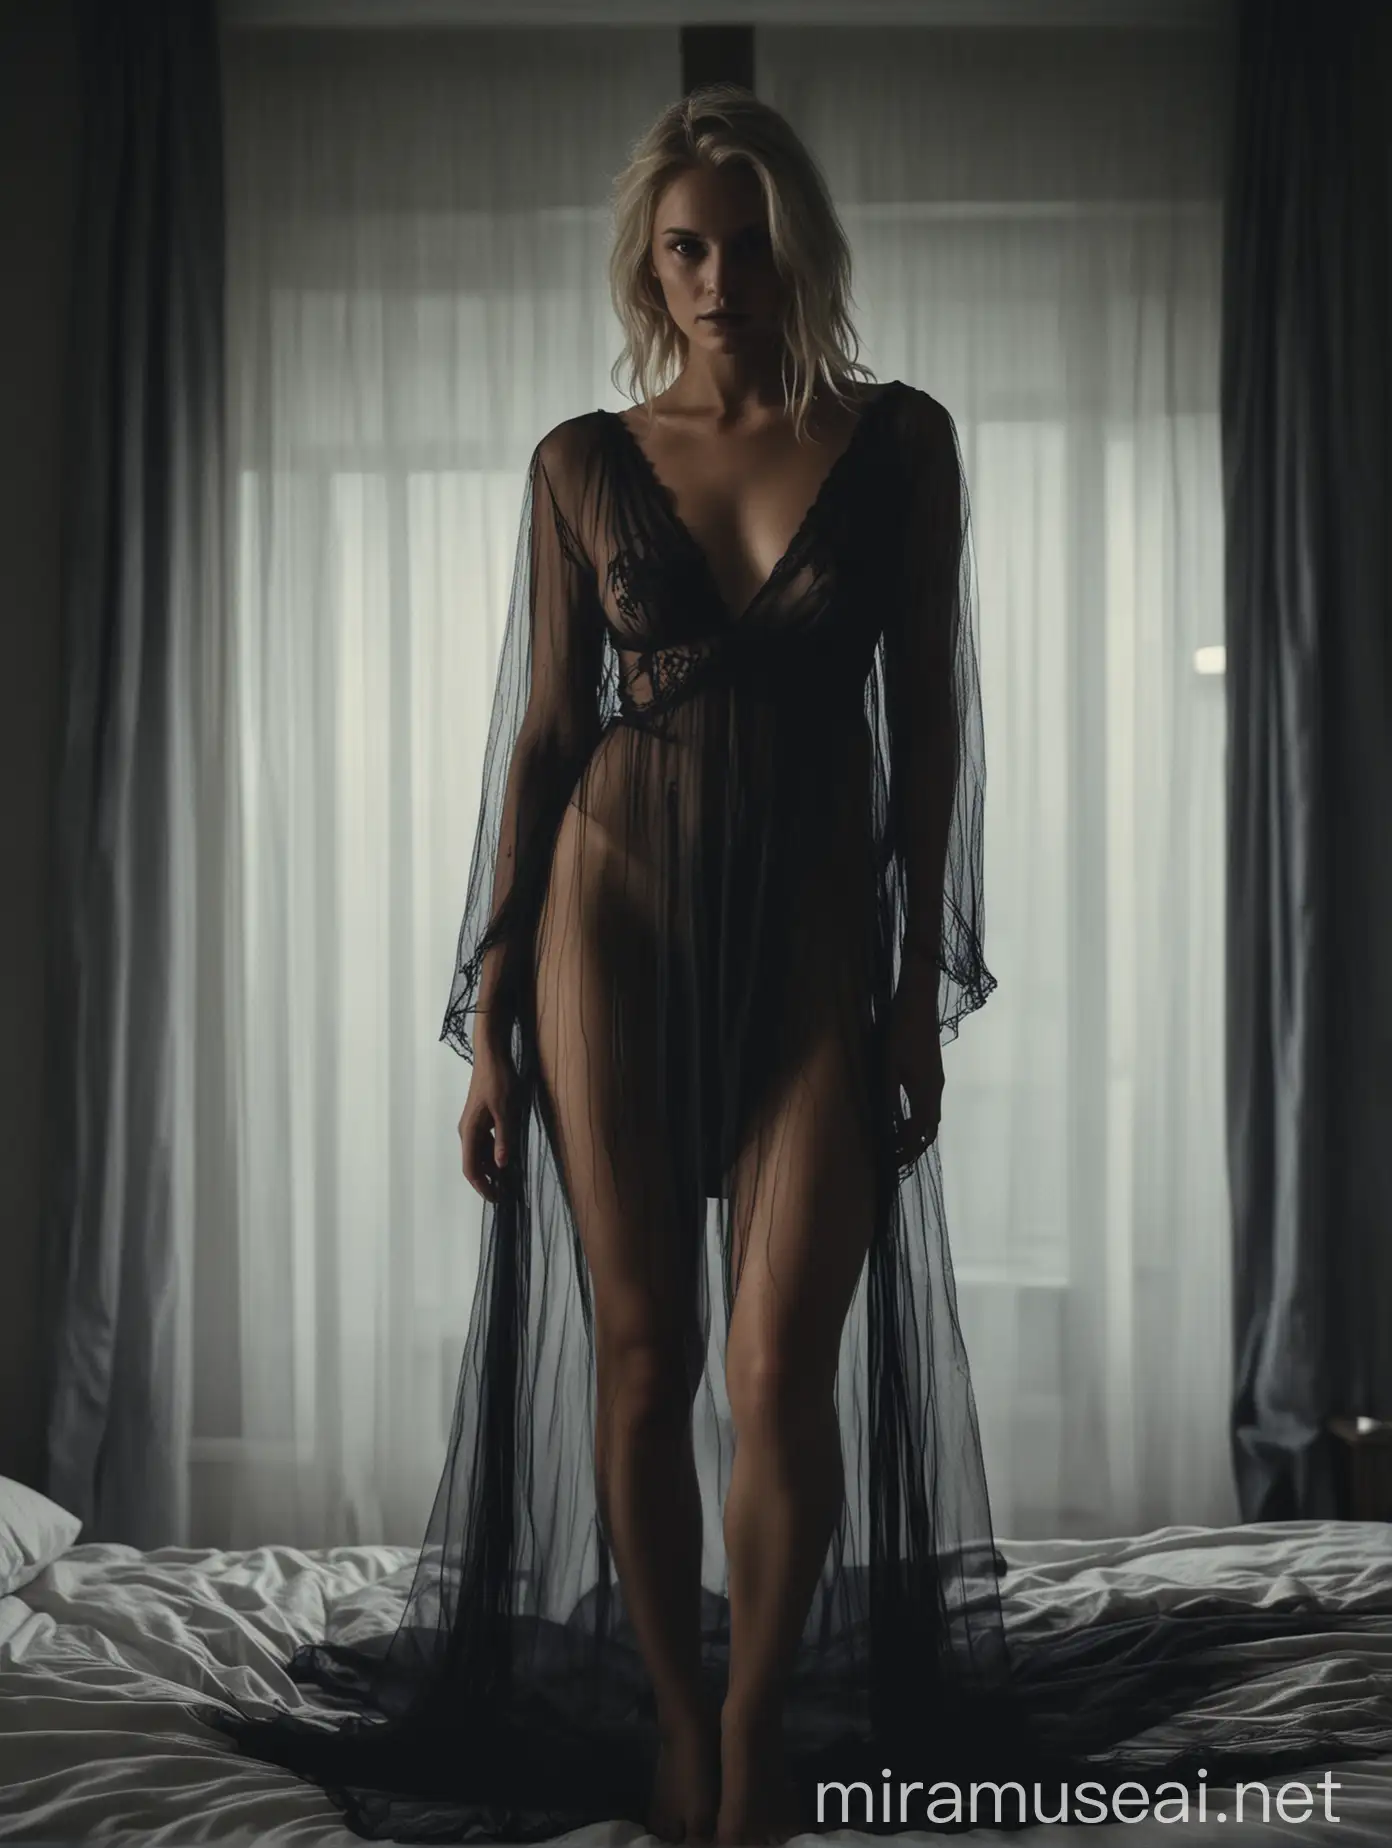 Nordic Woman in Sheer Dress Cinematic and Dark Bedroom Scene